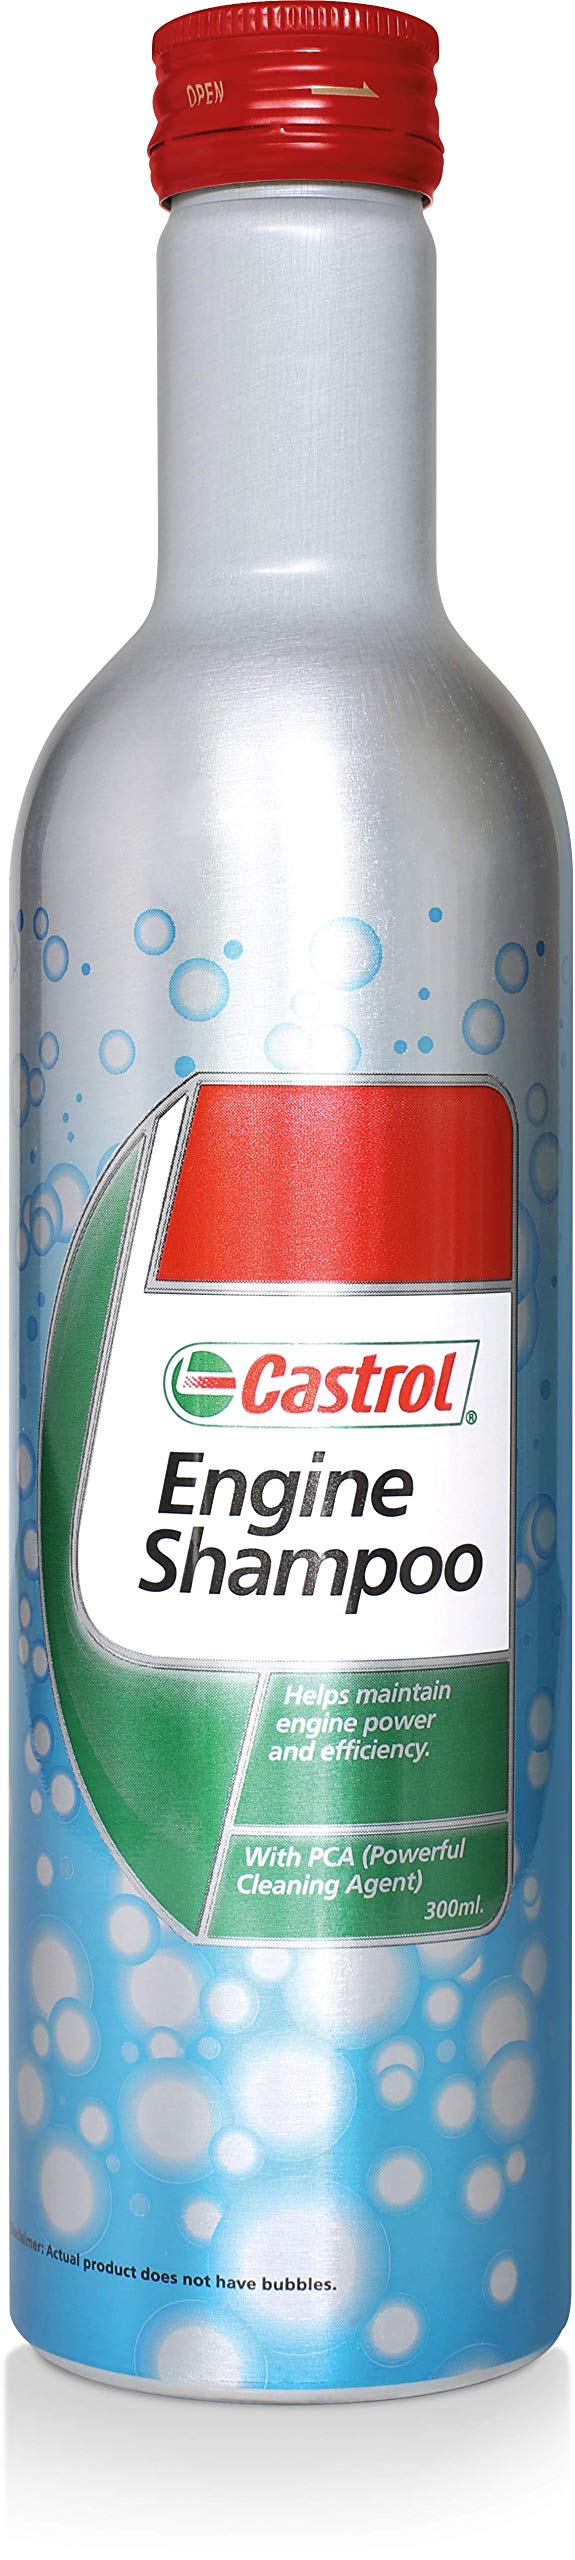 Castrol Engine Shampoo, 300 ml von Castrol